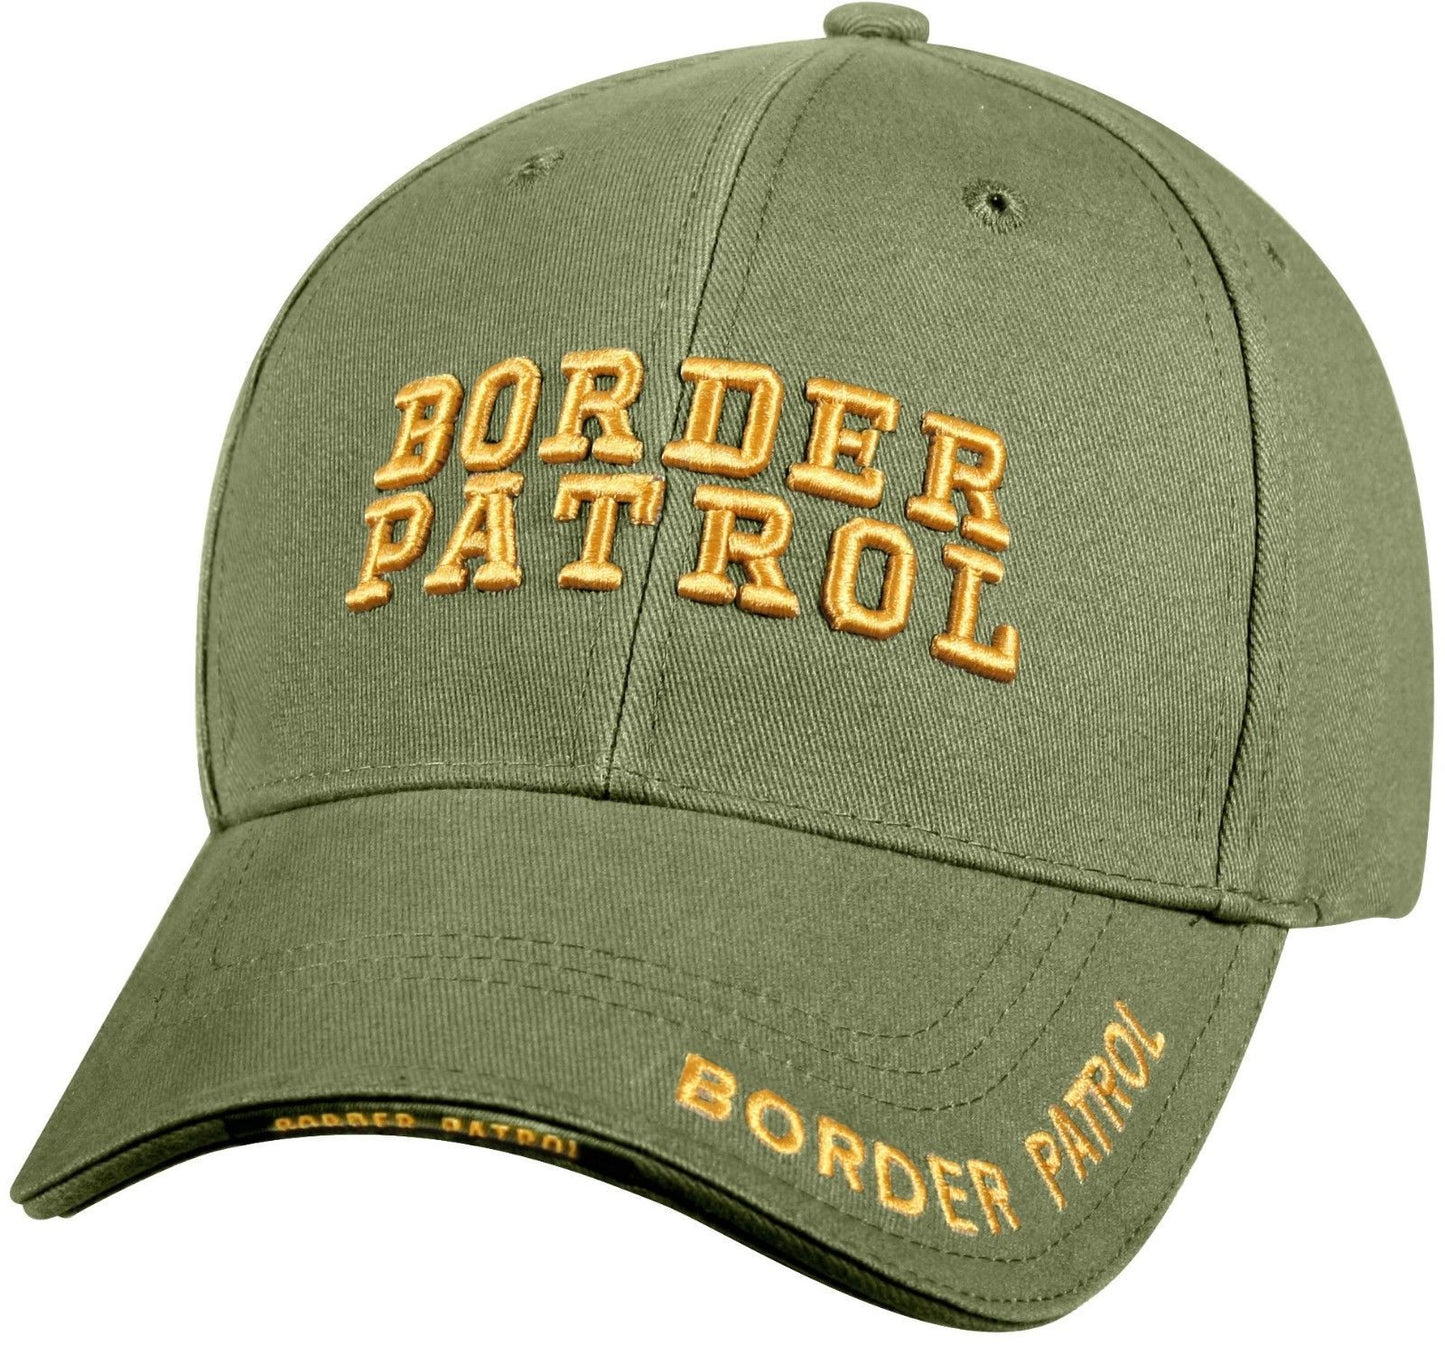 Border Patrol - Olive Drab - Deluxe Low Profile Baseball Cap